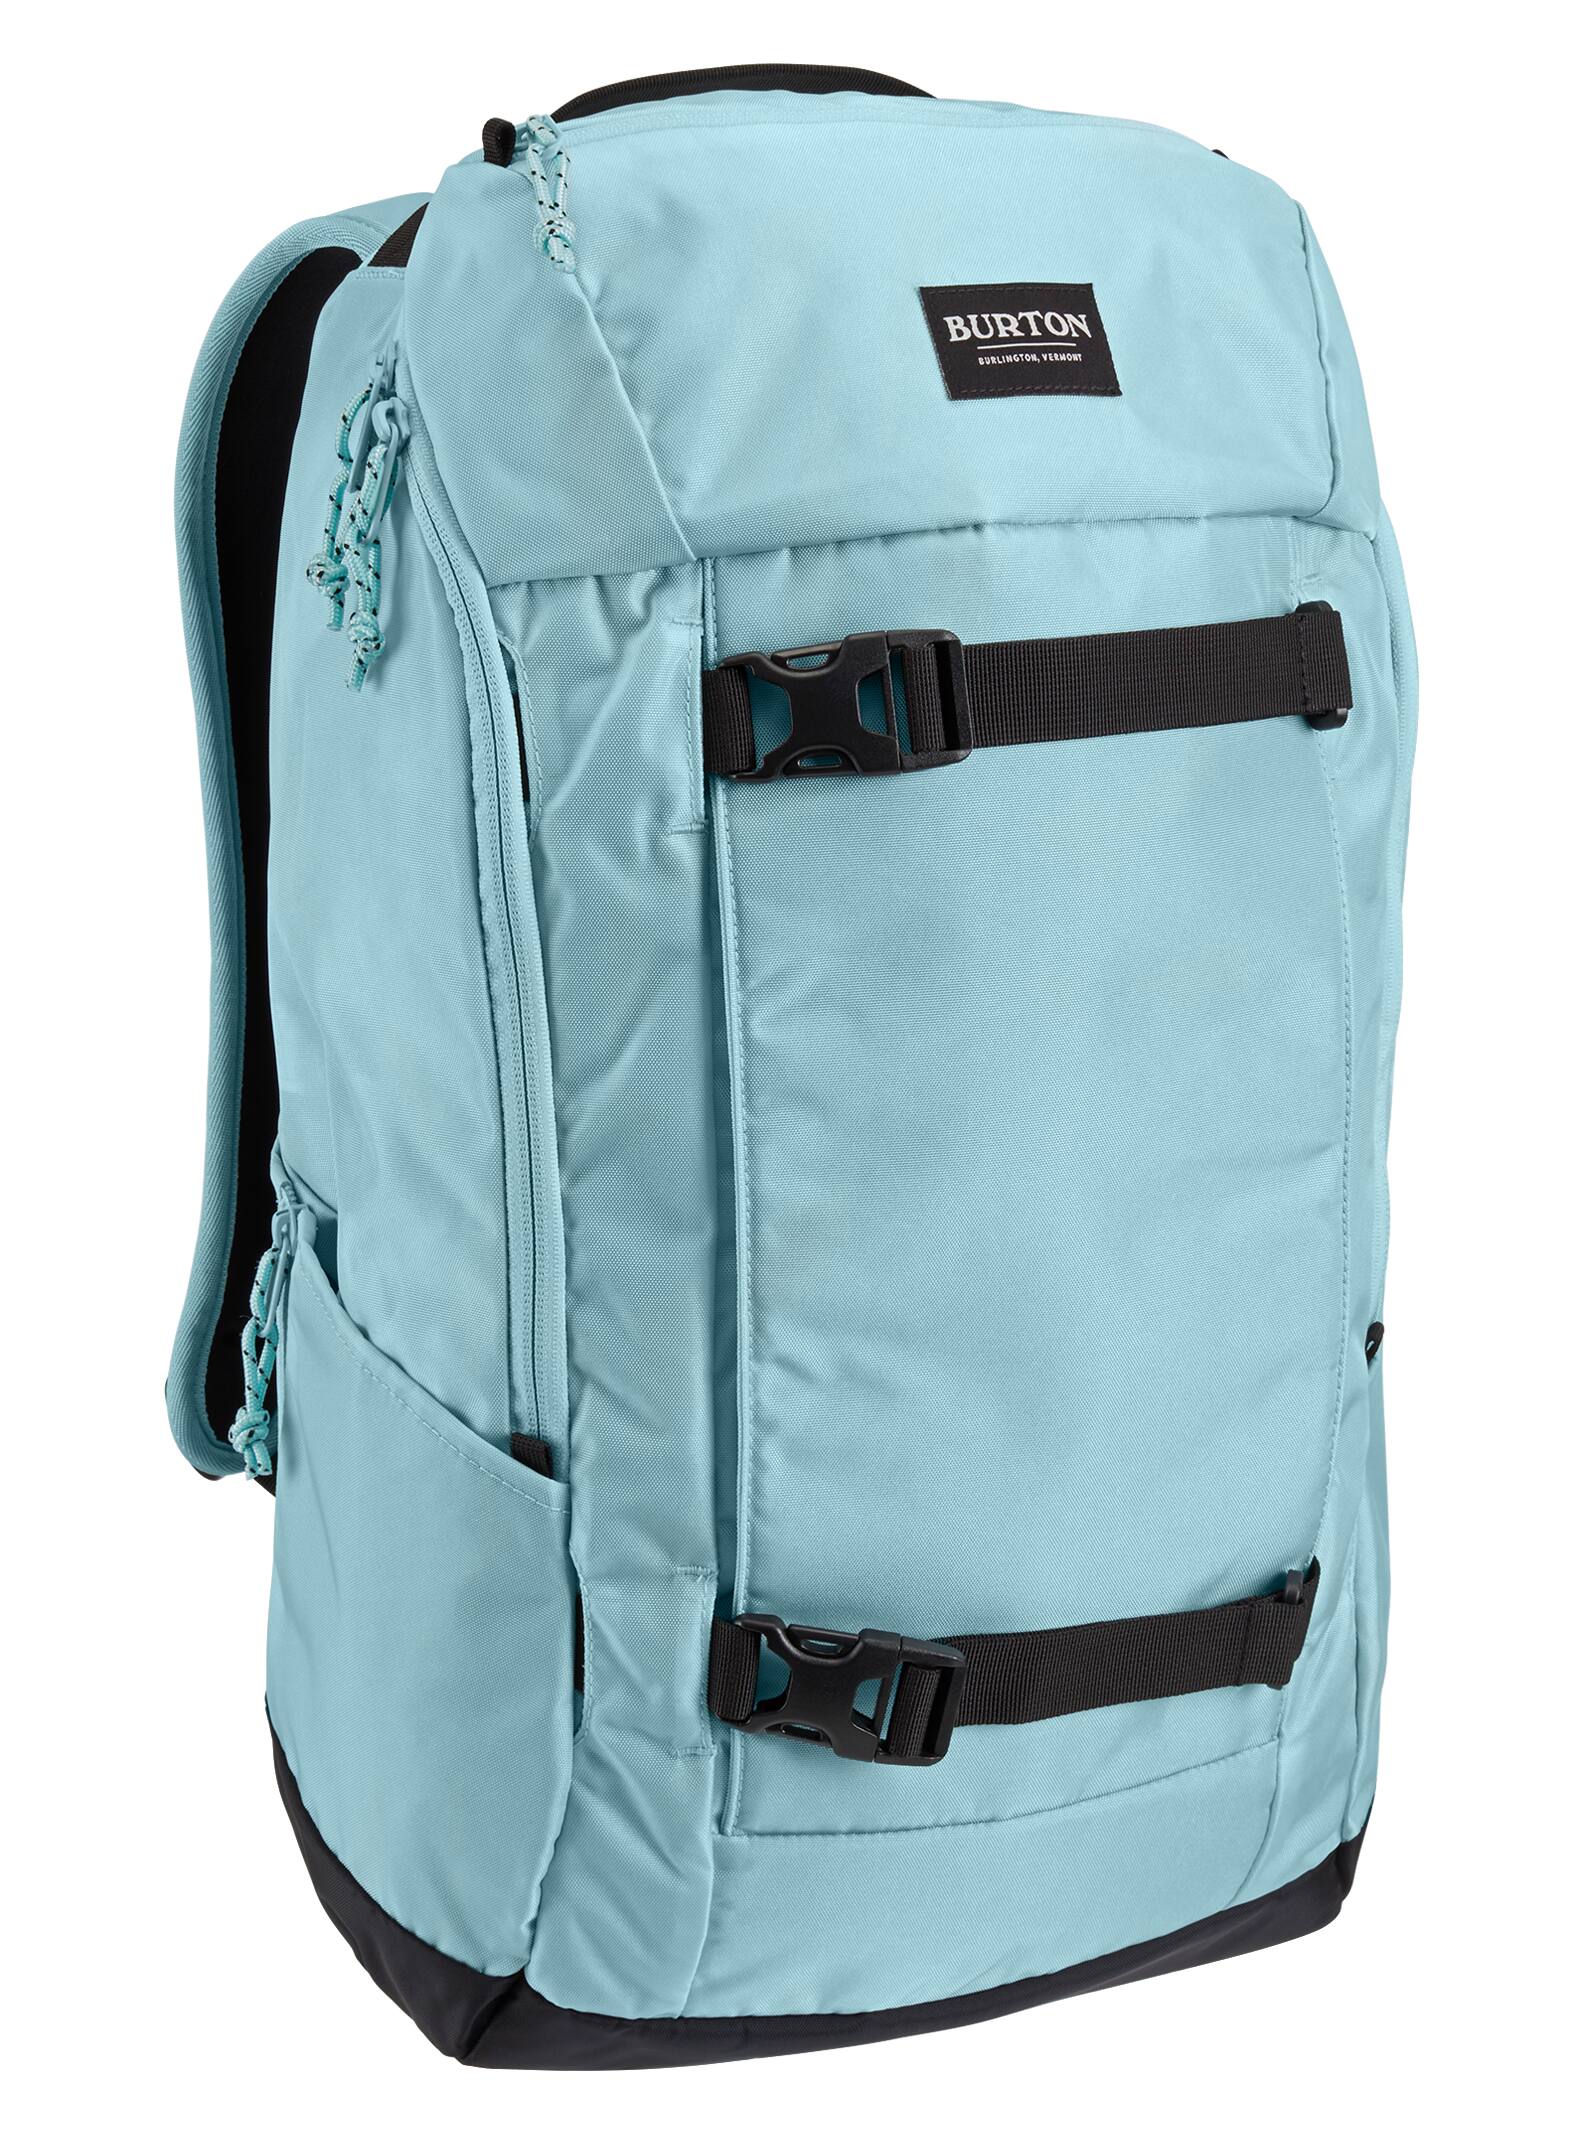 Burton Kilo 2.0 27L Backpack | Burton.com Spring 2021 DK